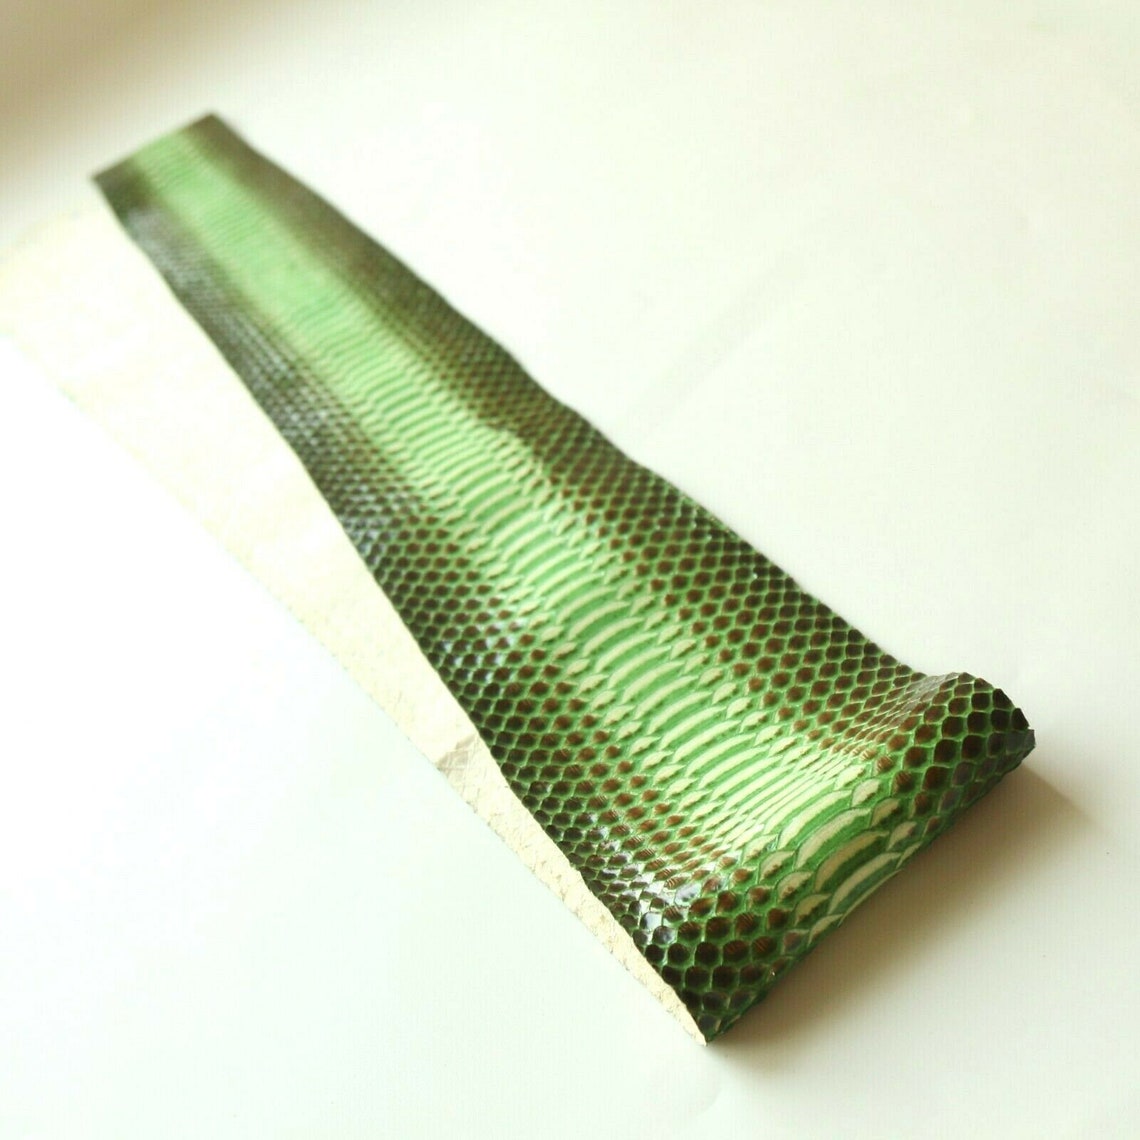 Authentic Sea Snake Skin SNAKESKIN HIDE Craft Supply 5 Colors - Etsy UK